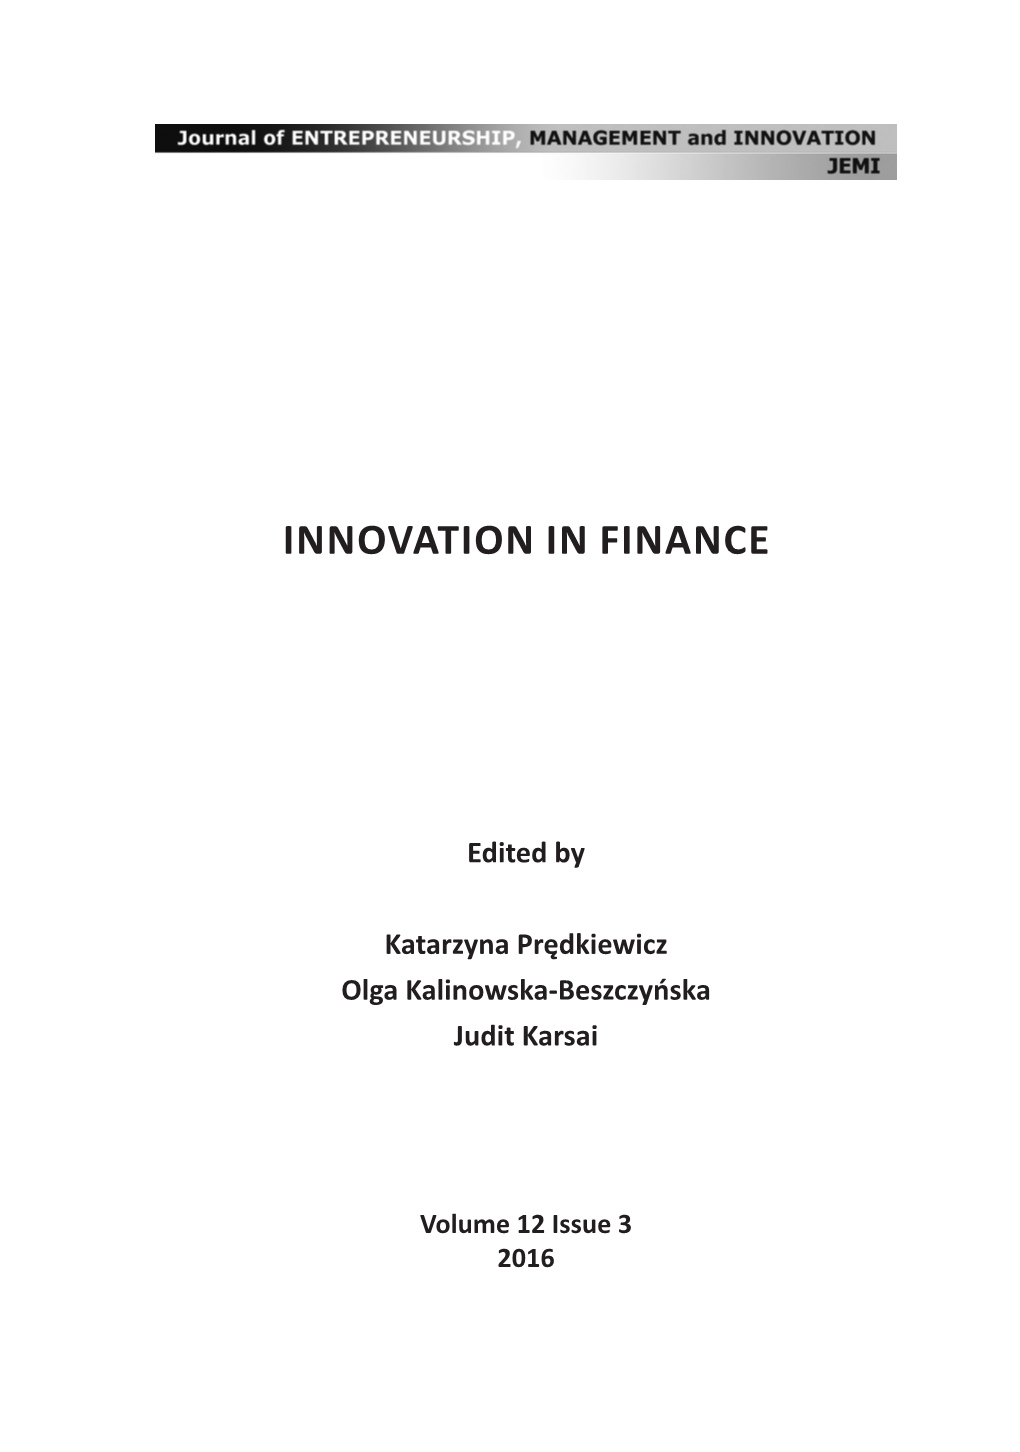 Innovation in Finance